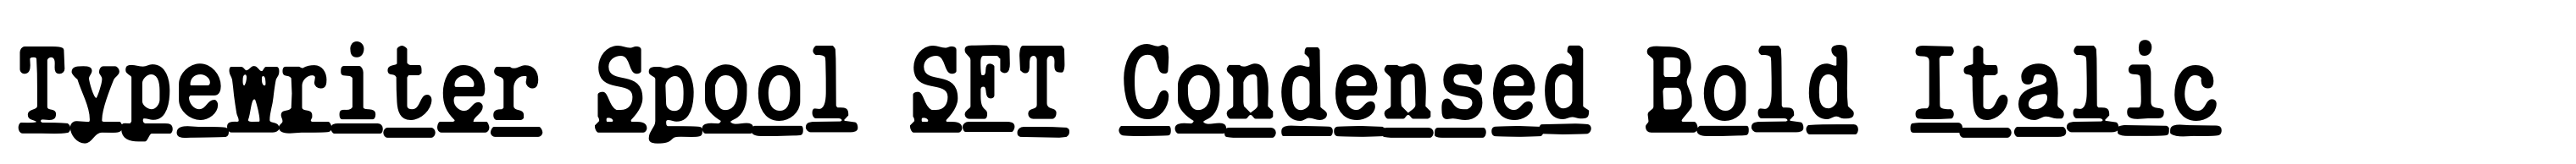 Typewriter Spool SFT Condensed Bold Italic